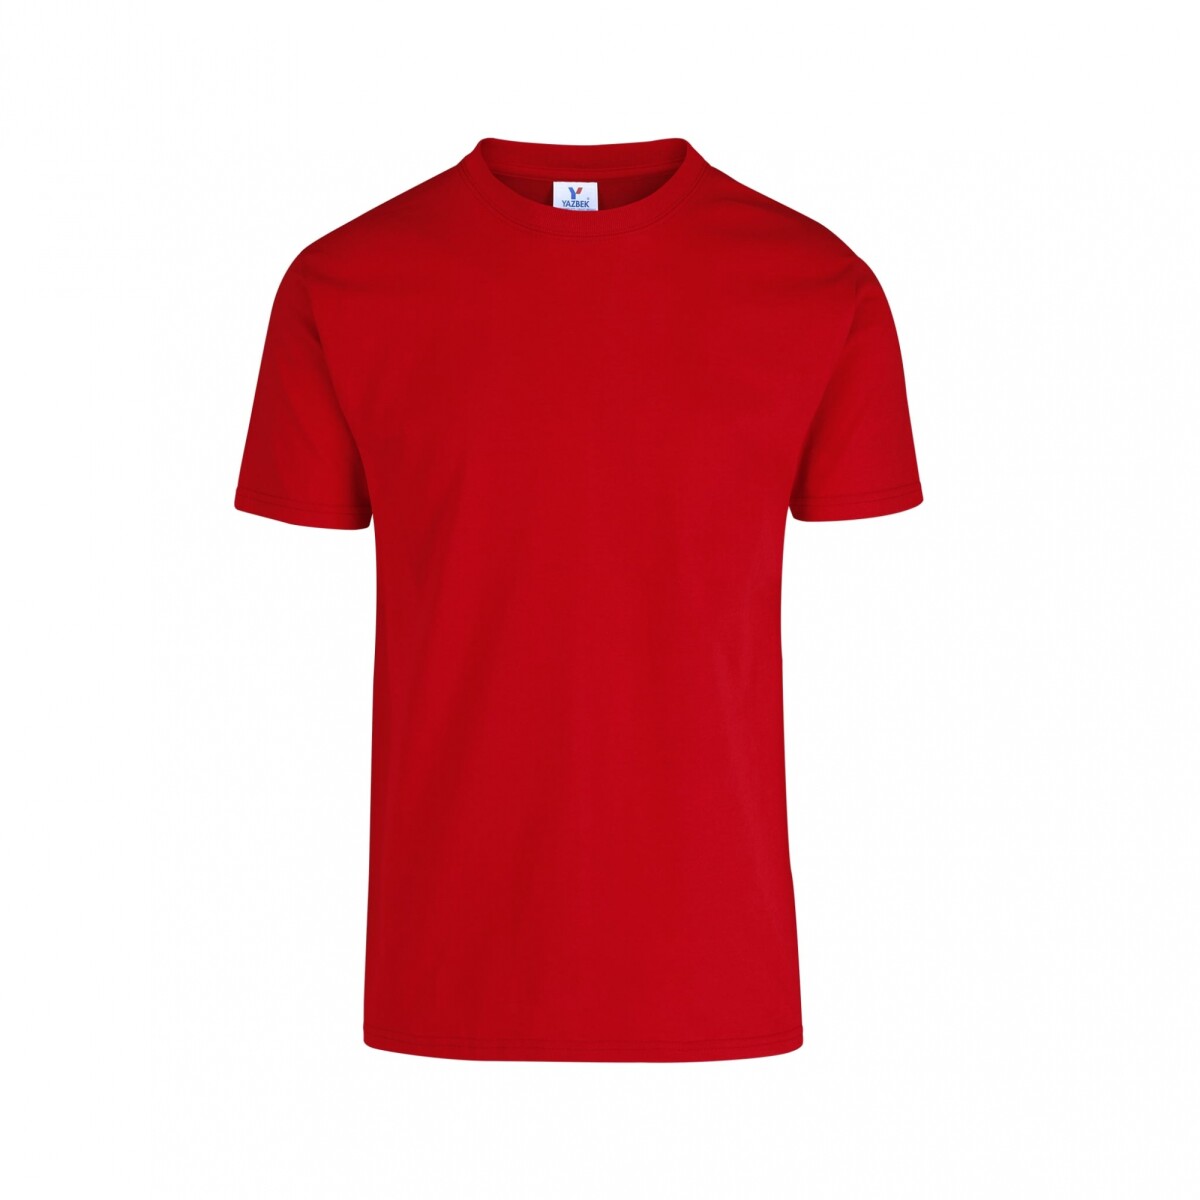 Camiseta a la base peso completo - Rojo 